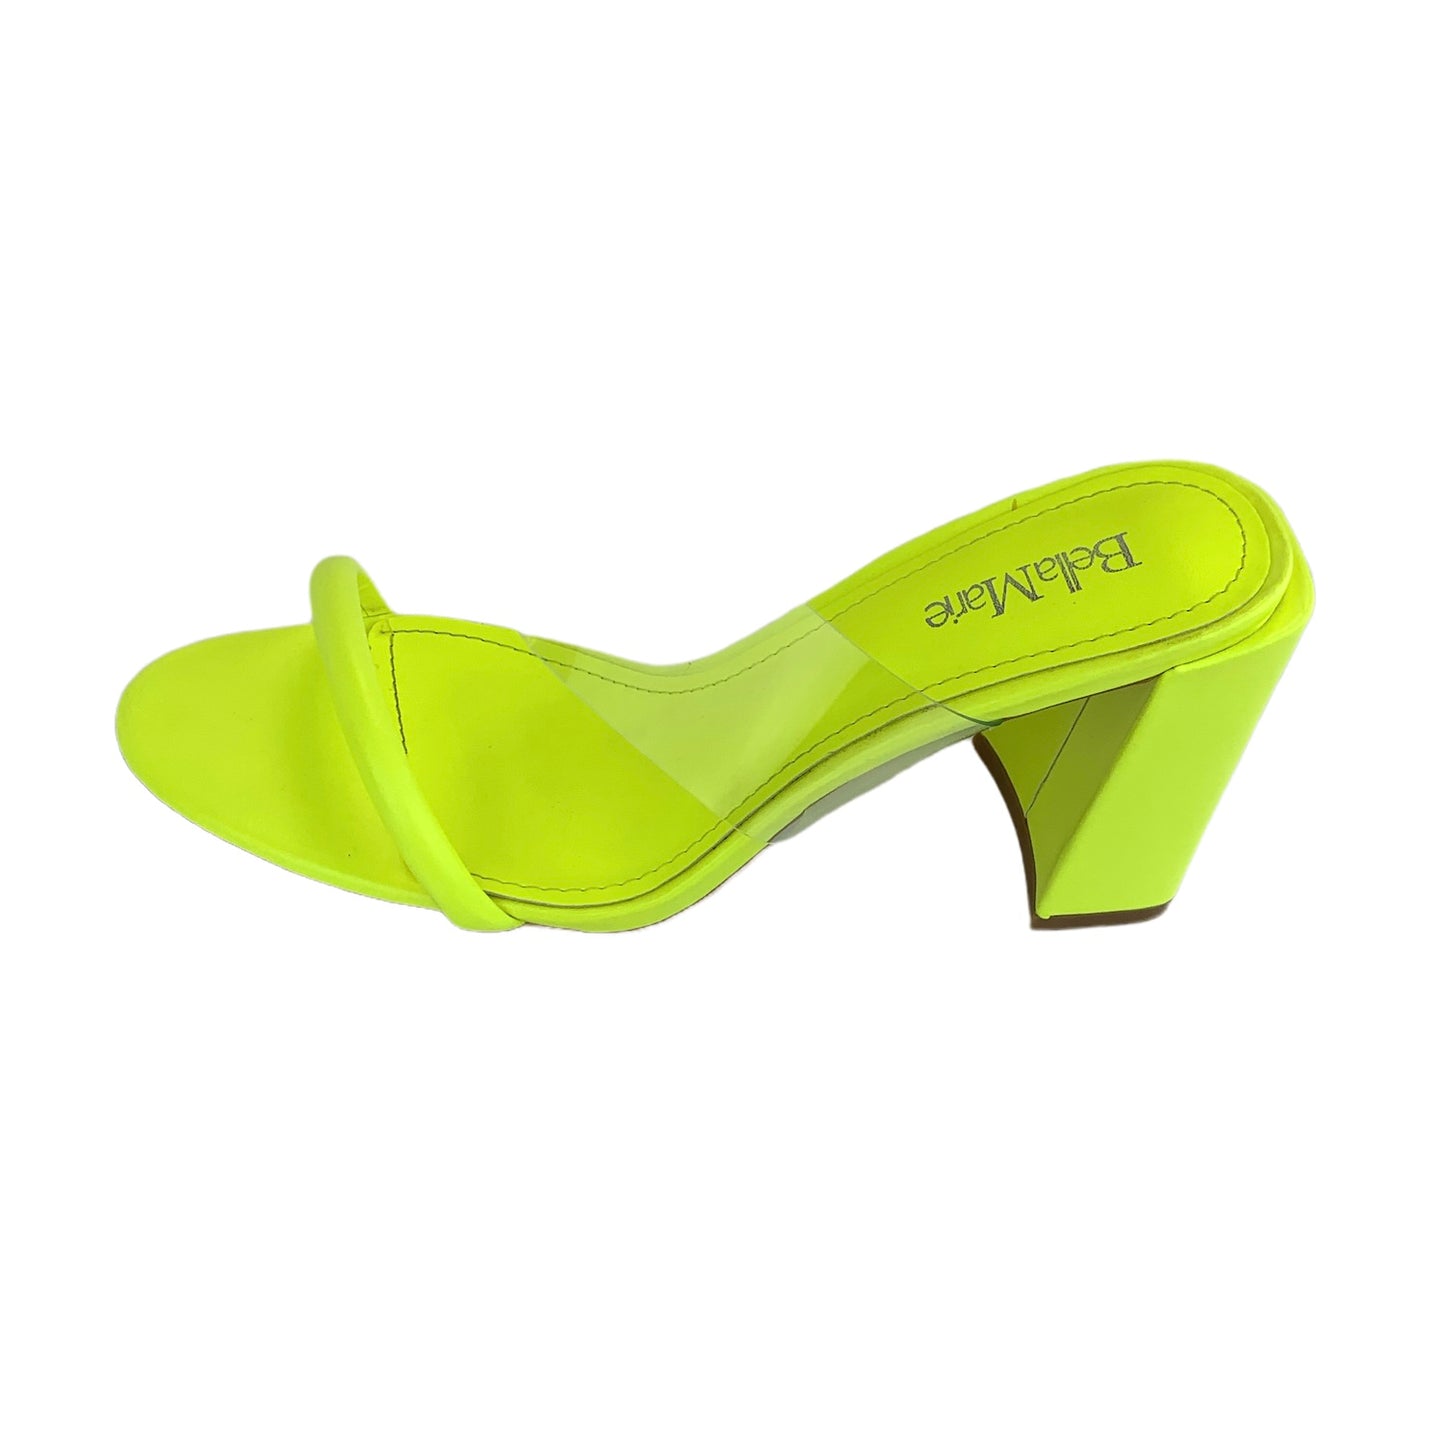 LOUNGE-1 Neon/Clear Slip On Block Heel Size 9 Fashion Women's Sandals